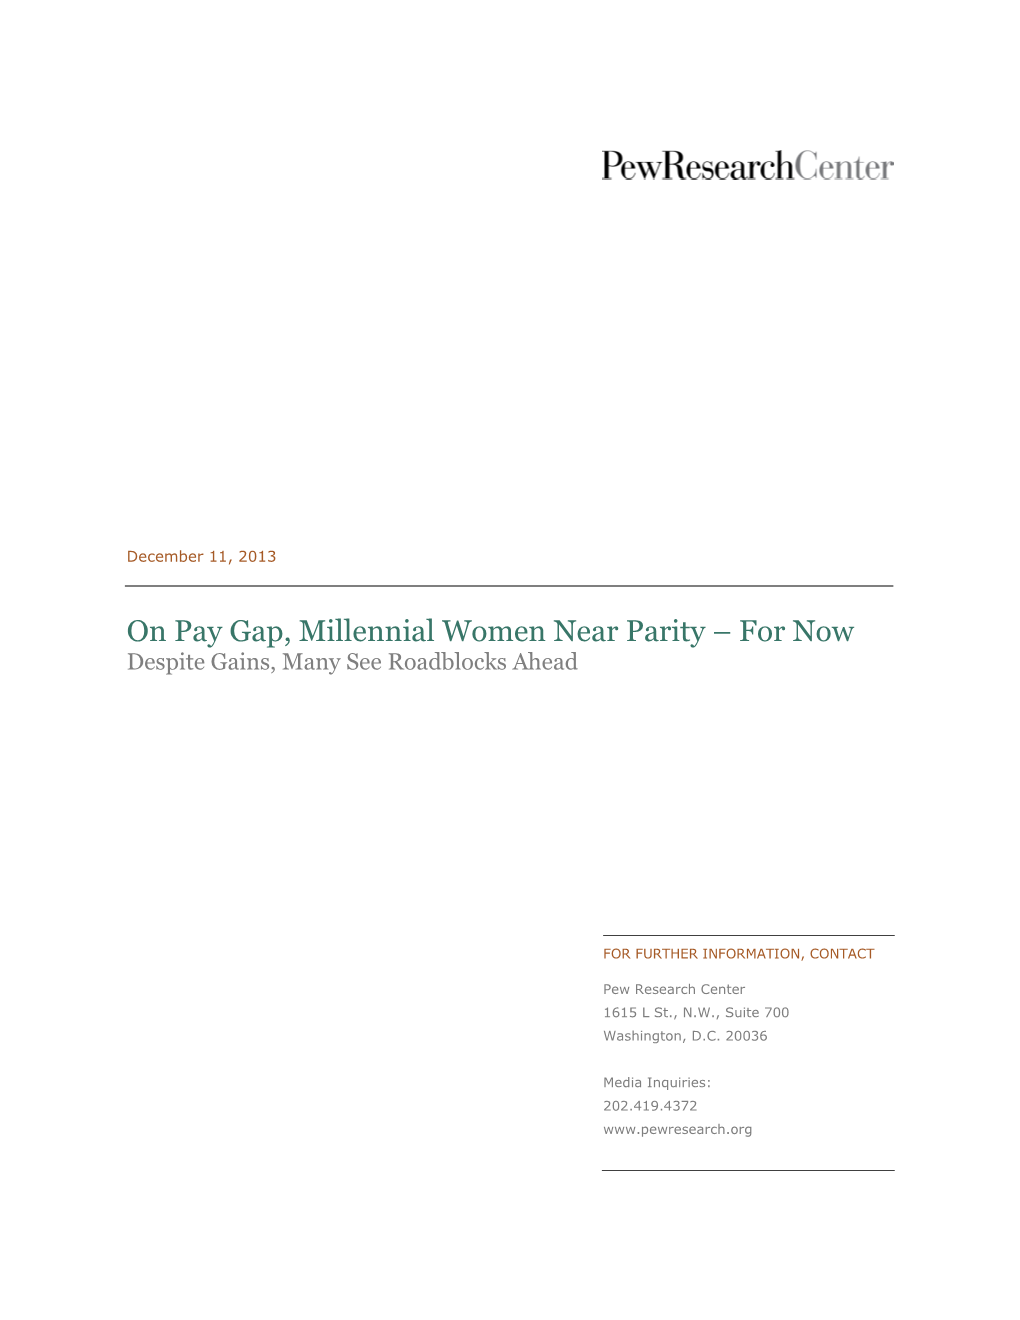 On Pay Gap, Millennial Women Near Parity – for Now Despite Gains, Many See Roadblocks Ahead